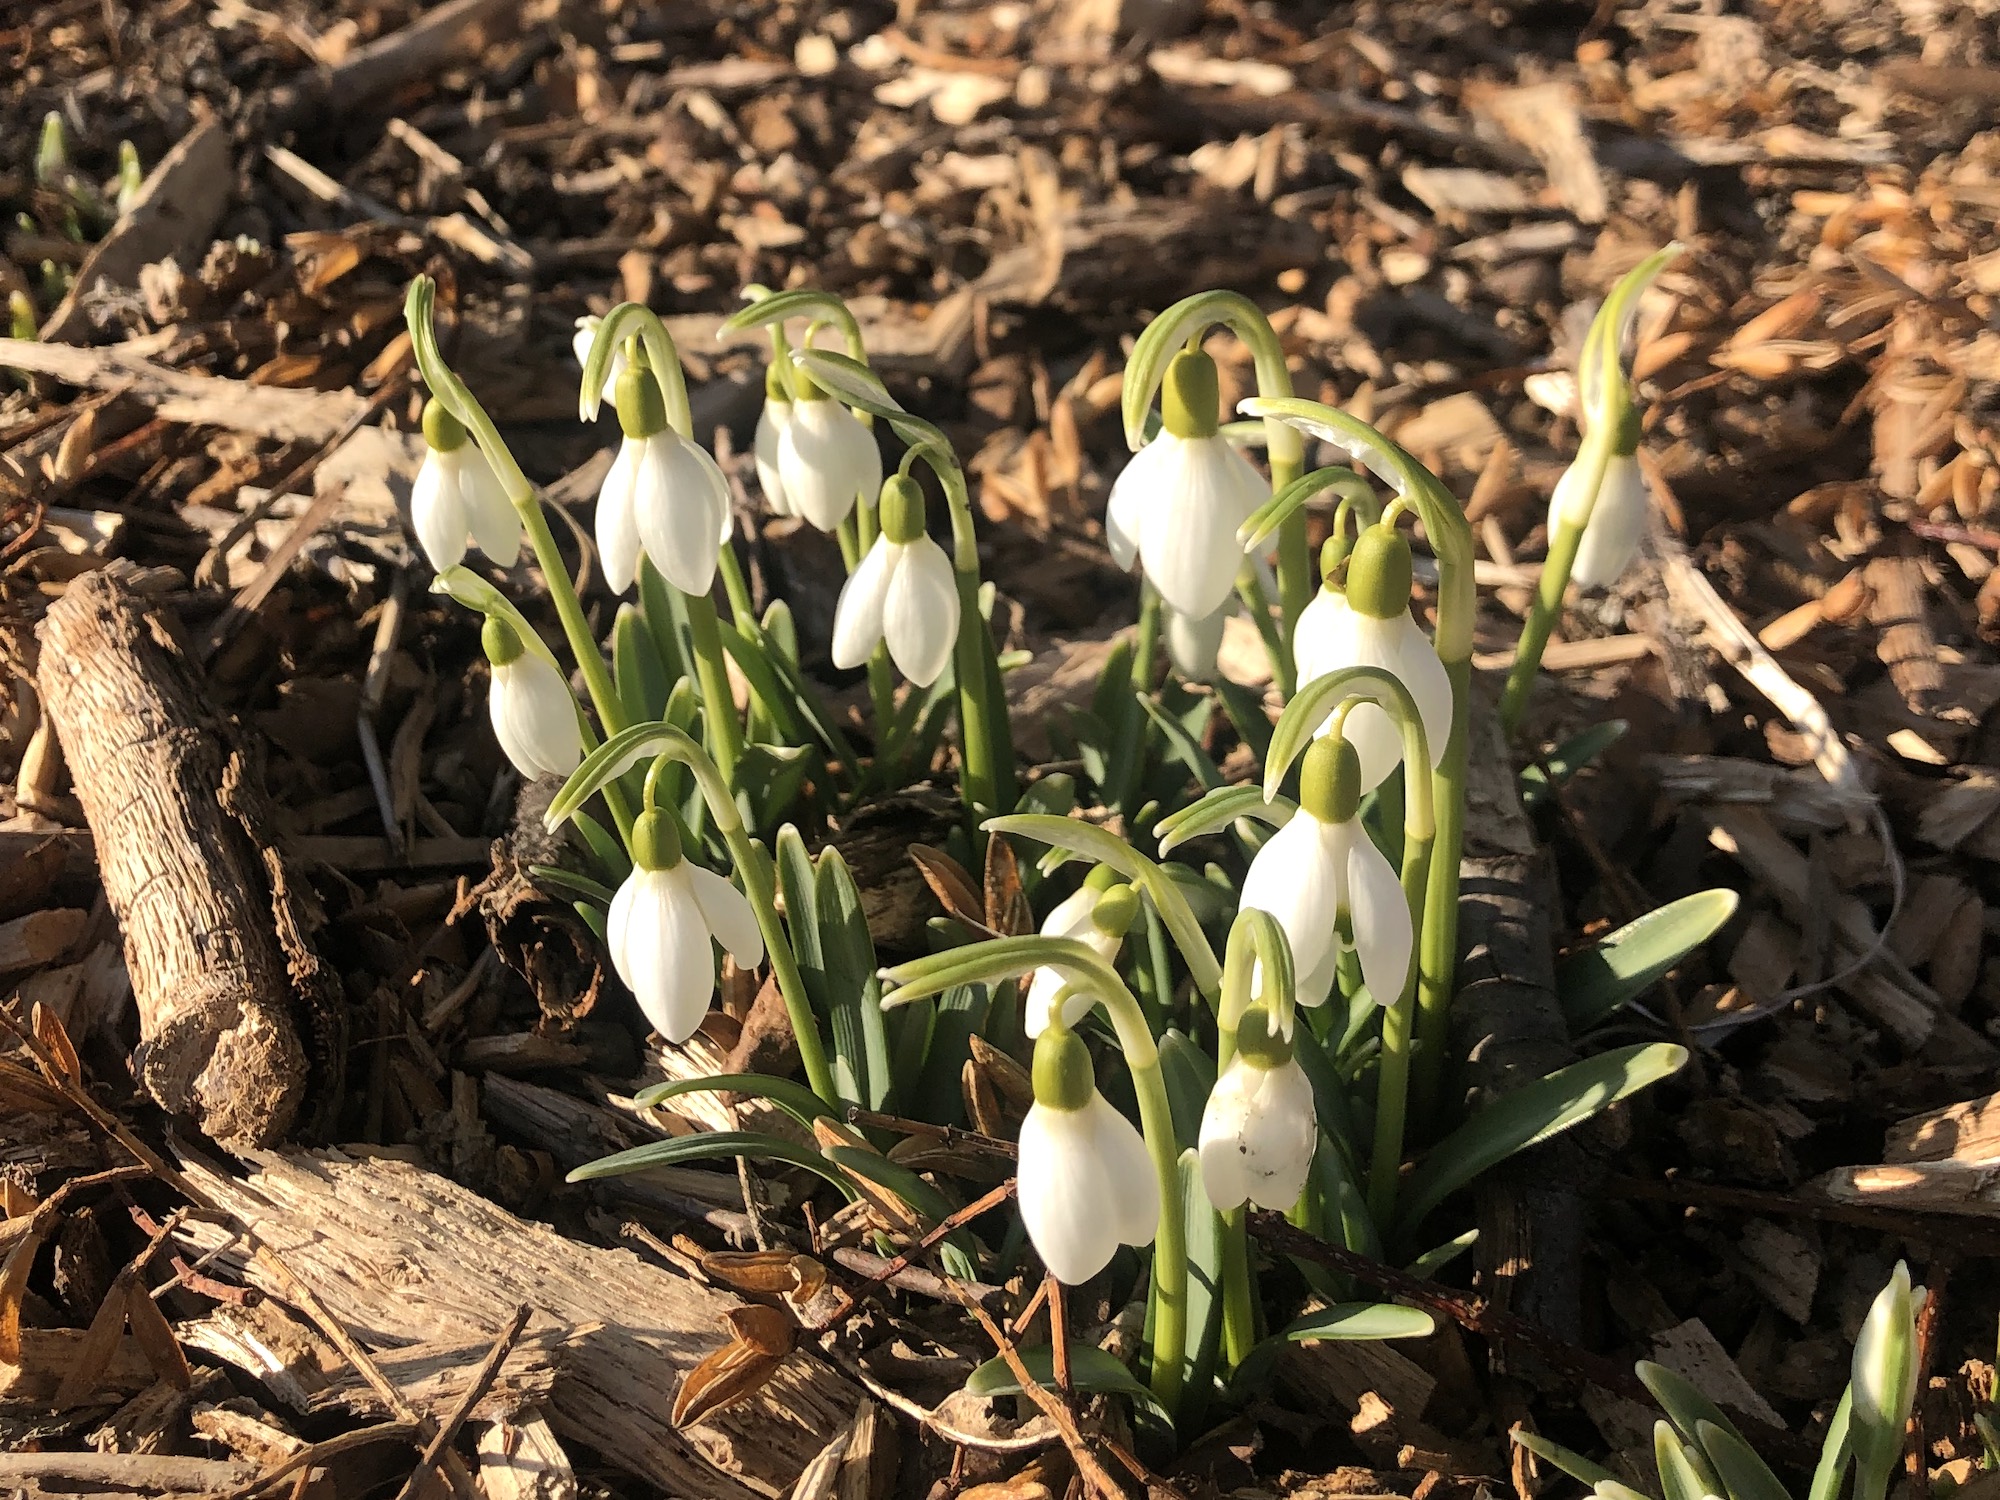 Snowdrops in the University of Wisconsin Arbortetum Longenecker Gardens in Madison Wisconsin on March 1, 2023.